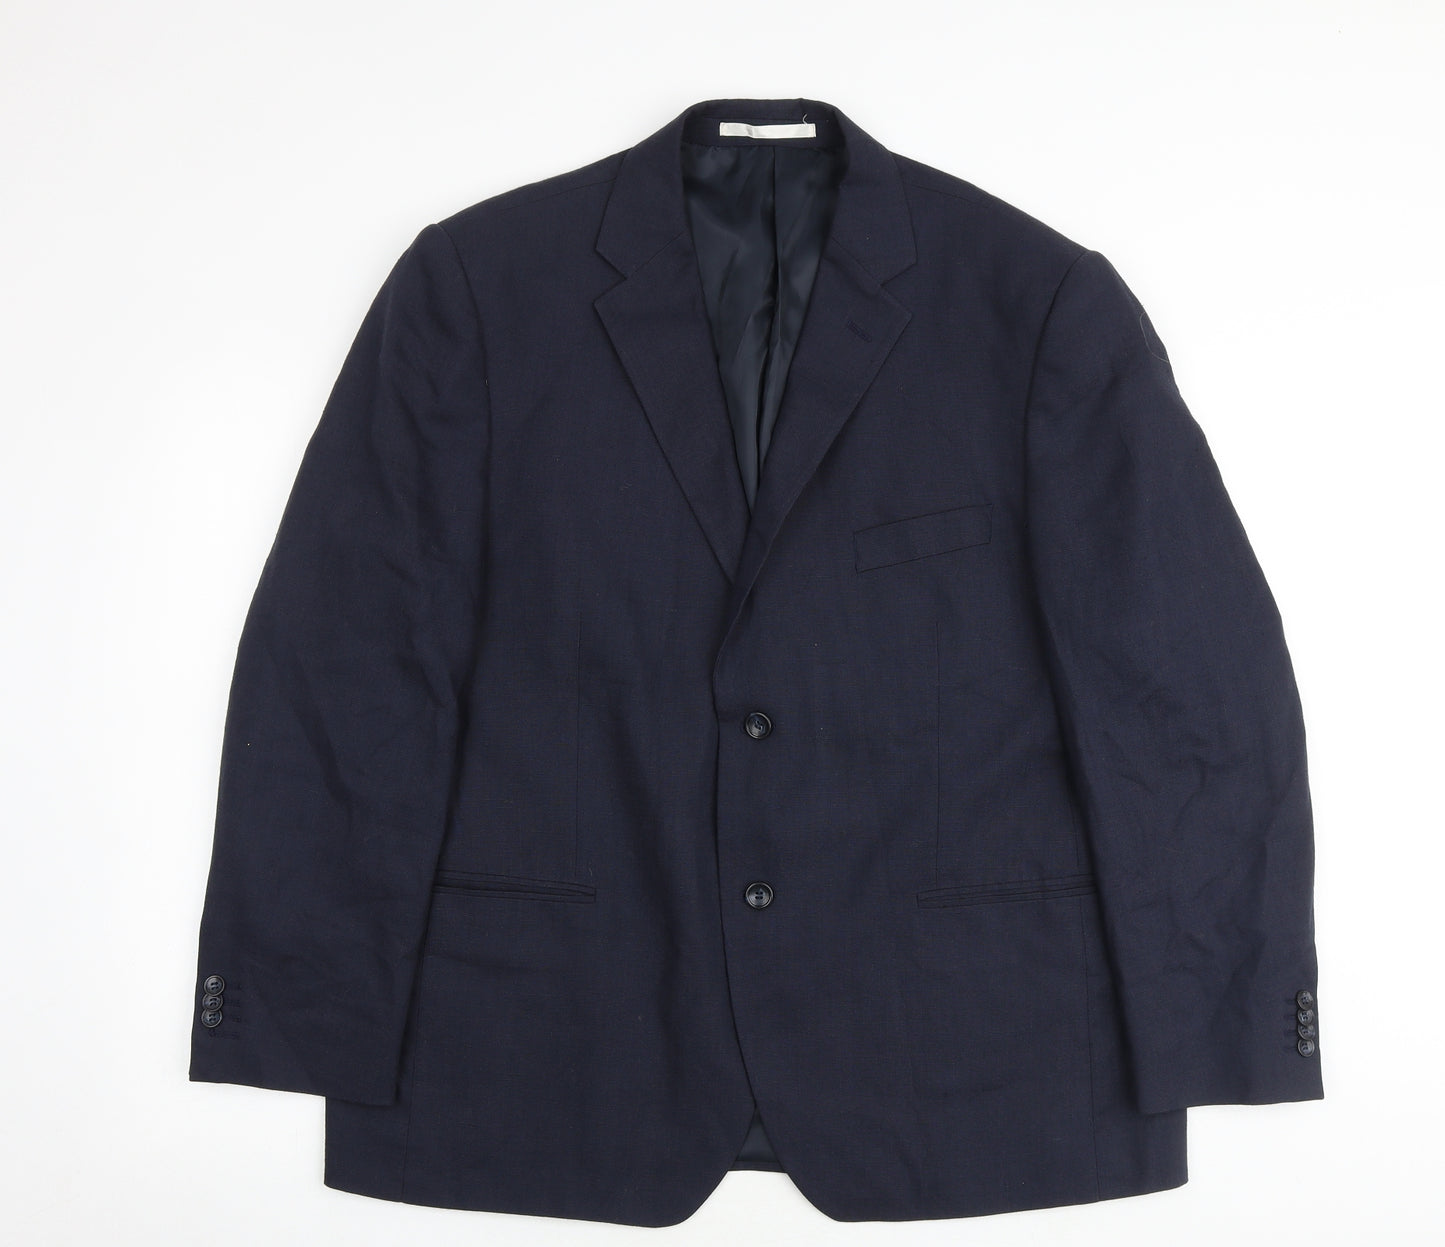 Marks and Spencer Mens Blue Flax Jacket Suit Jacket Size 44 Regular